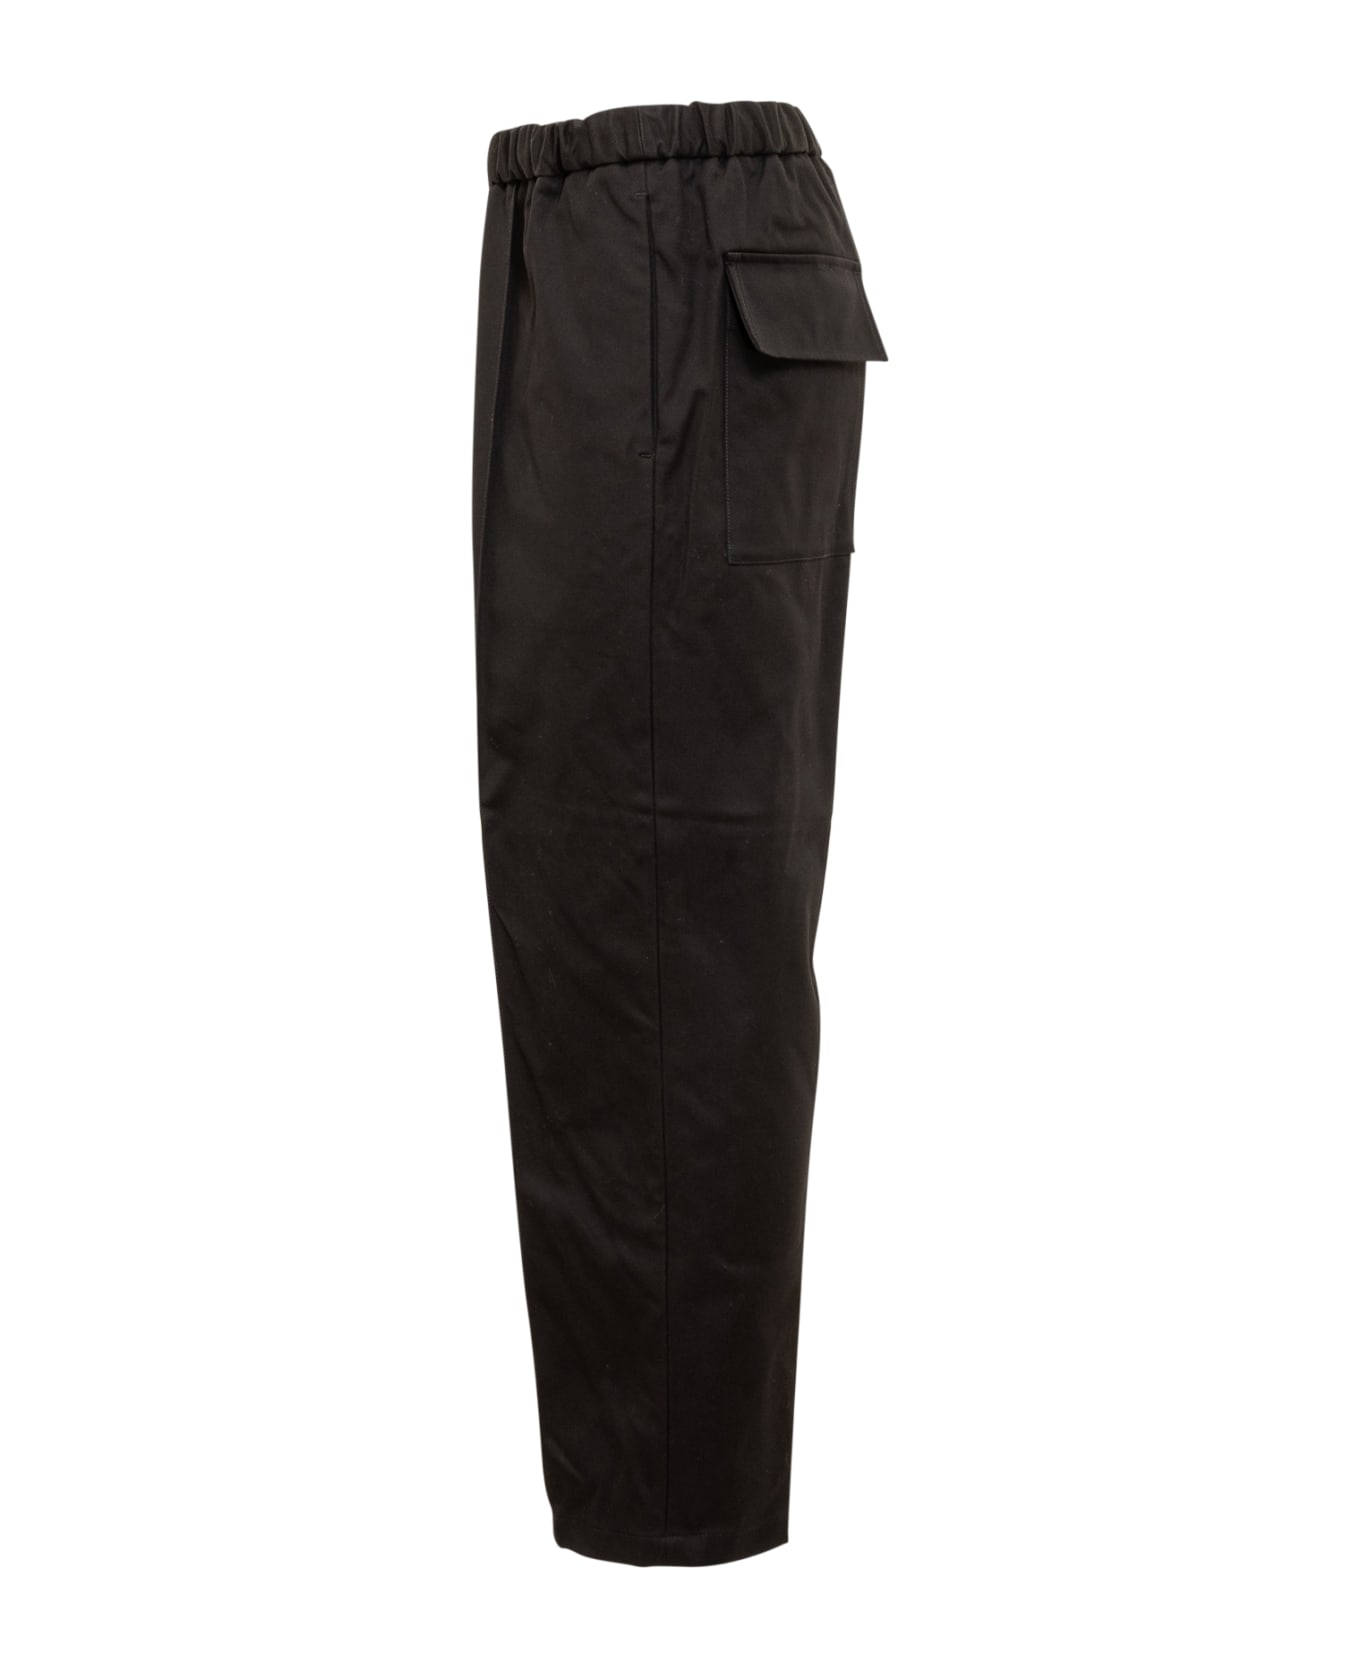 Jil Sander D 09 Aw 20 Trousers - BLACK